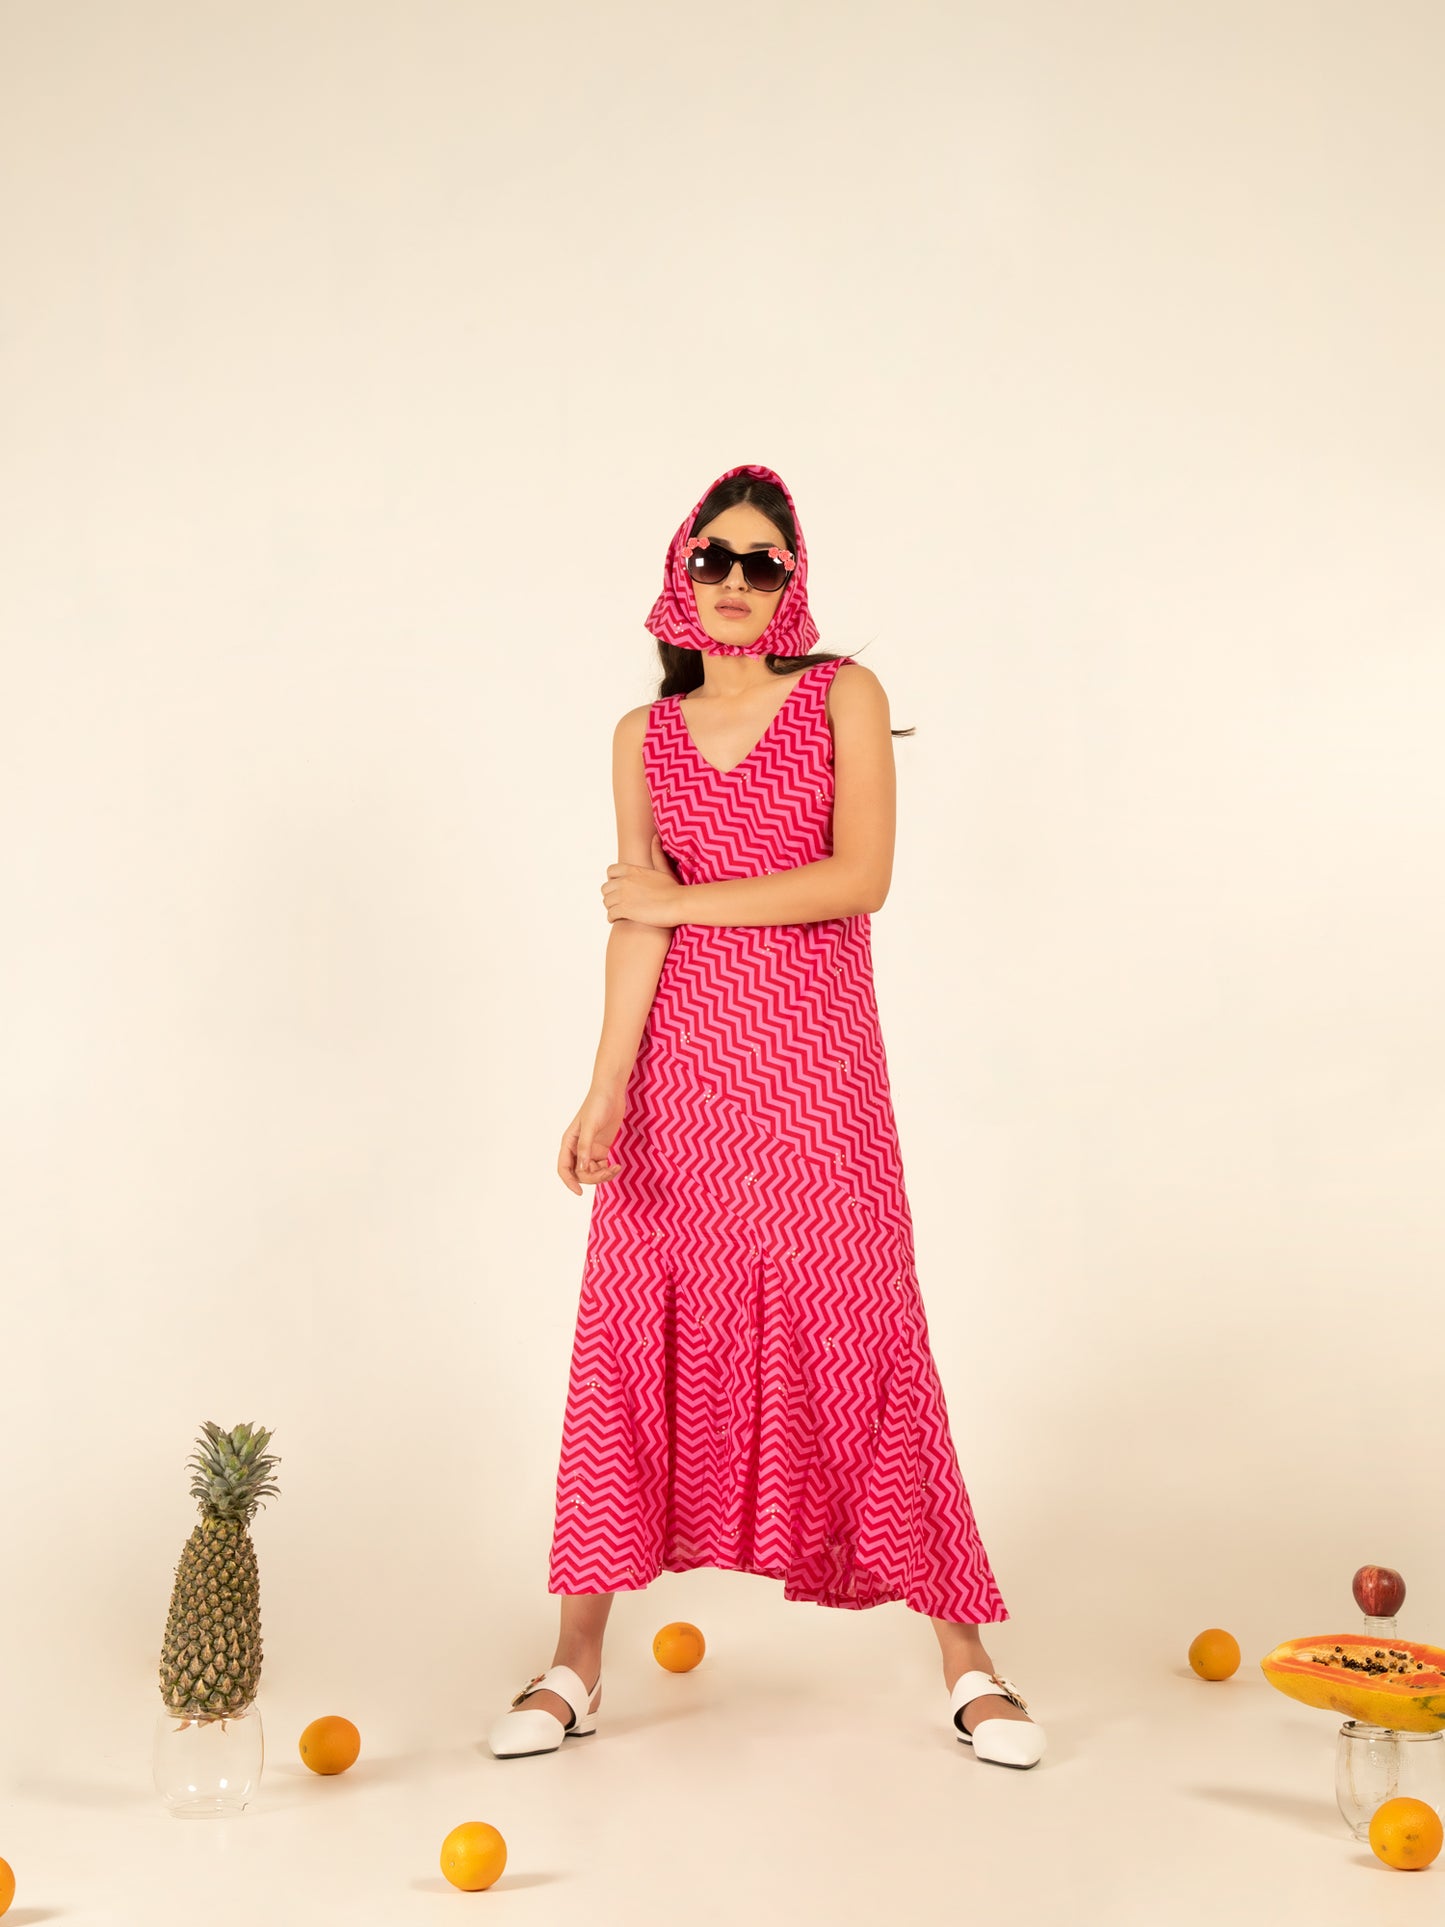 Sophia Pink Flounce Dress - Pink Hand Block Printed Sleeveless Cotton Dress